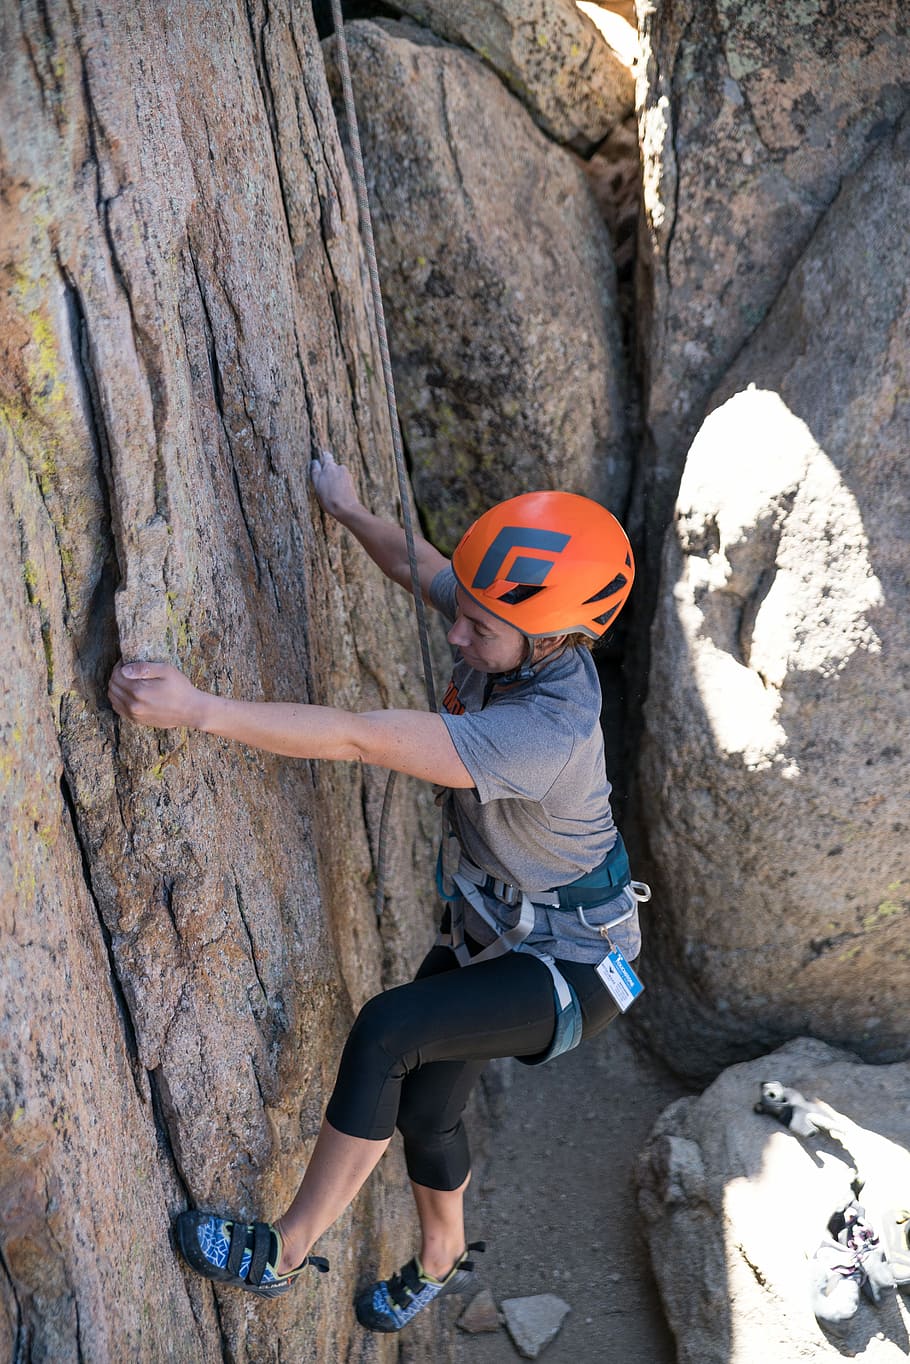 HD wallpaper: woman in orange helmet and safety gear climbing